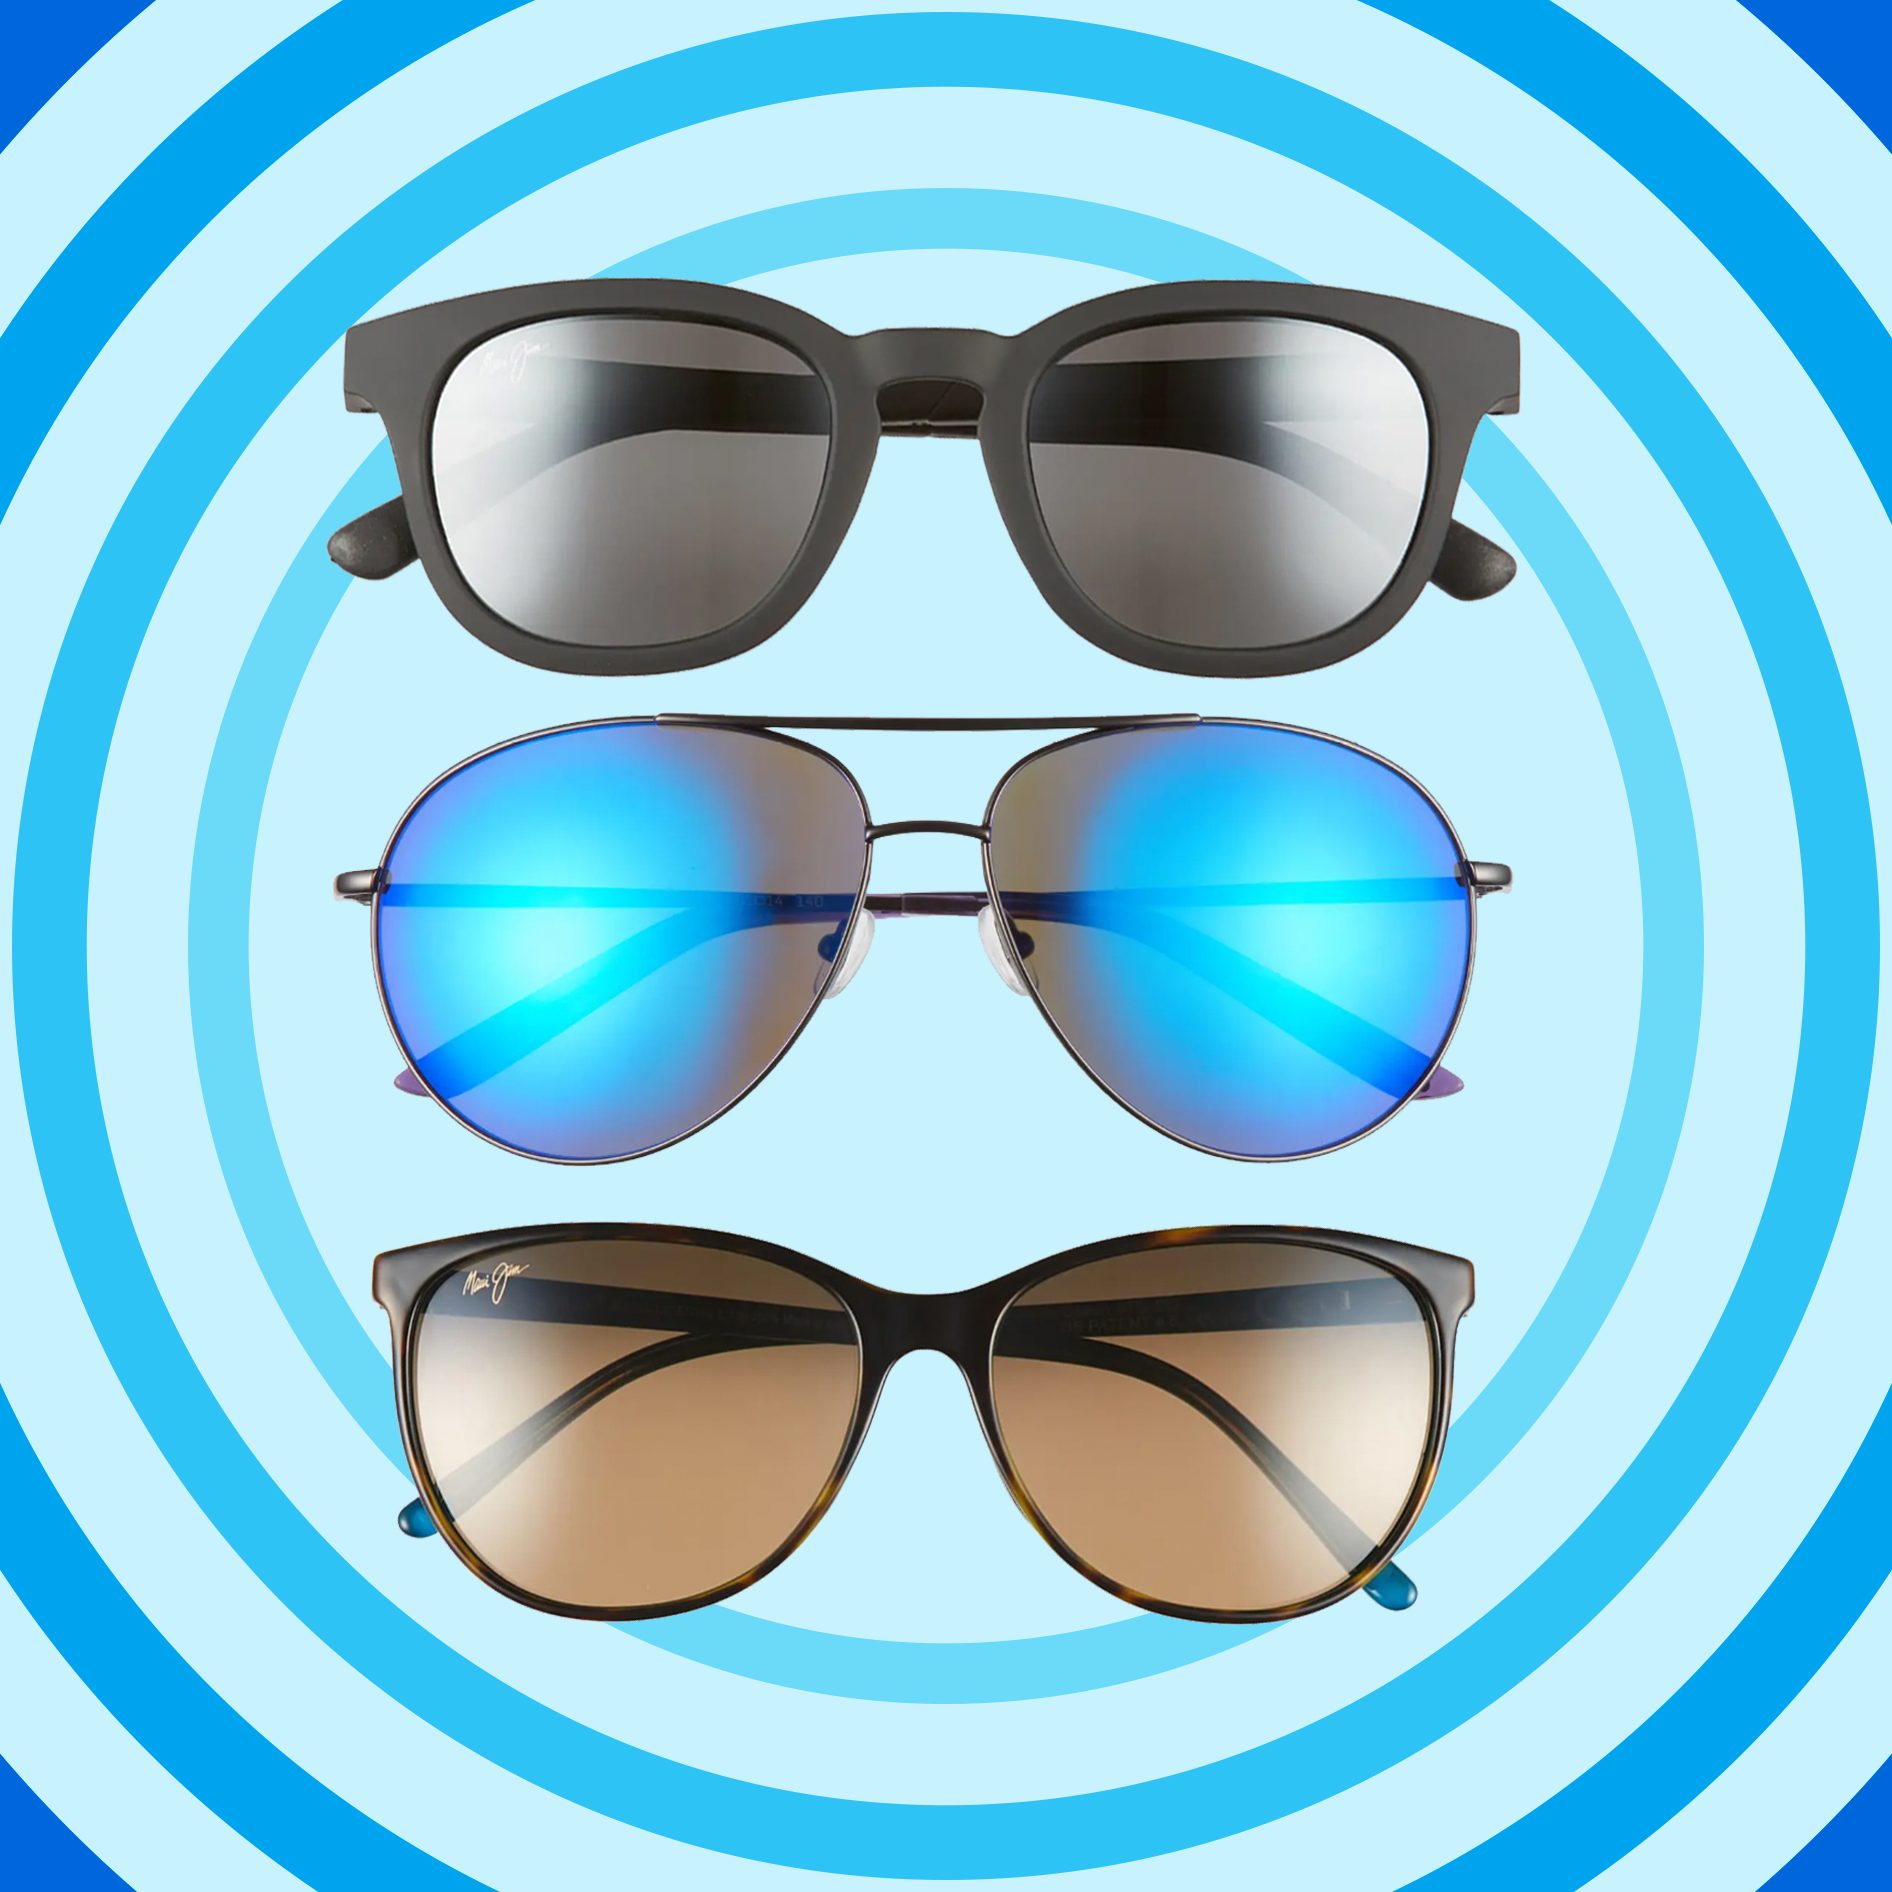 Women Retro Fashion Sunglasses with100% UV protection,Aviator Oval Frame Sunglasses for Men Unisex Classic Glasses